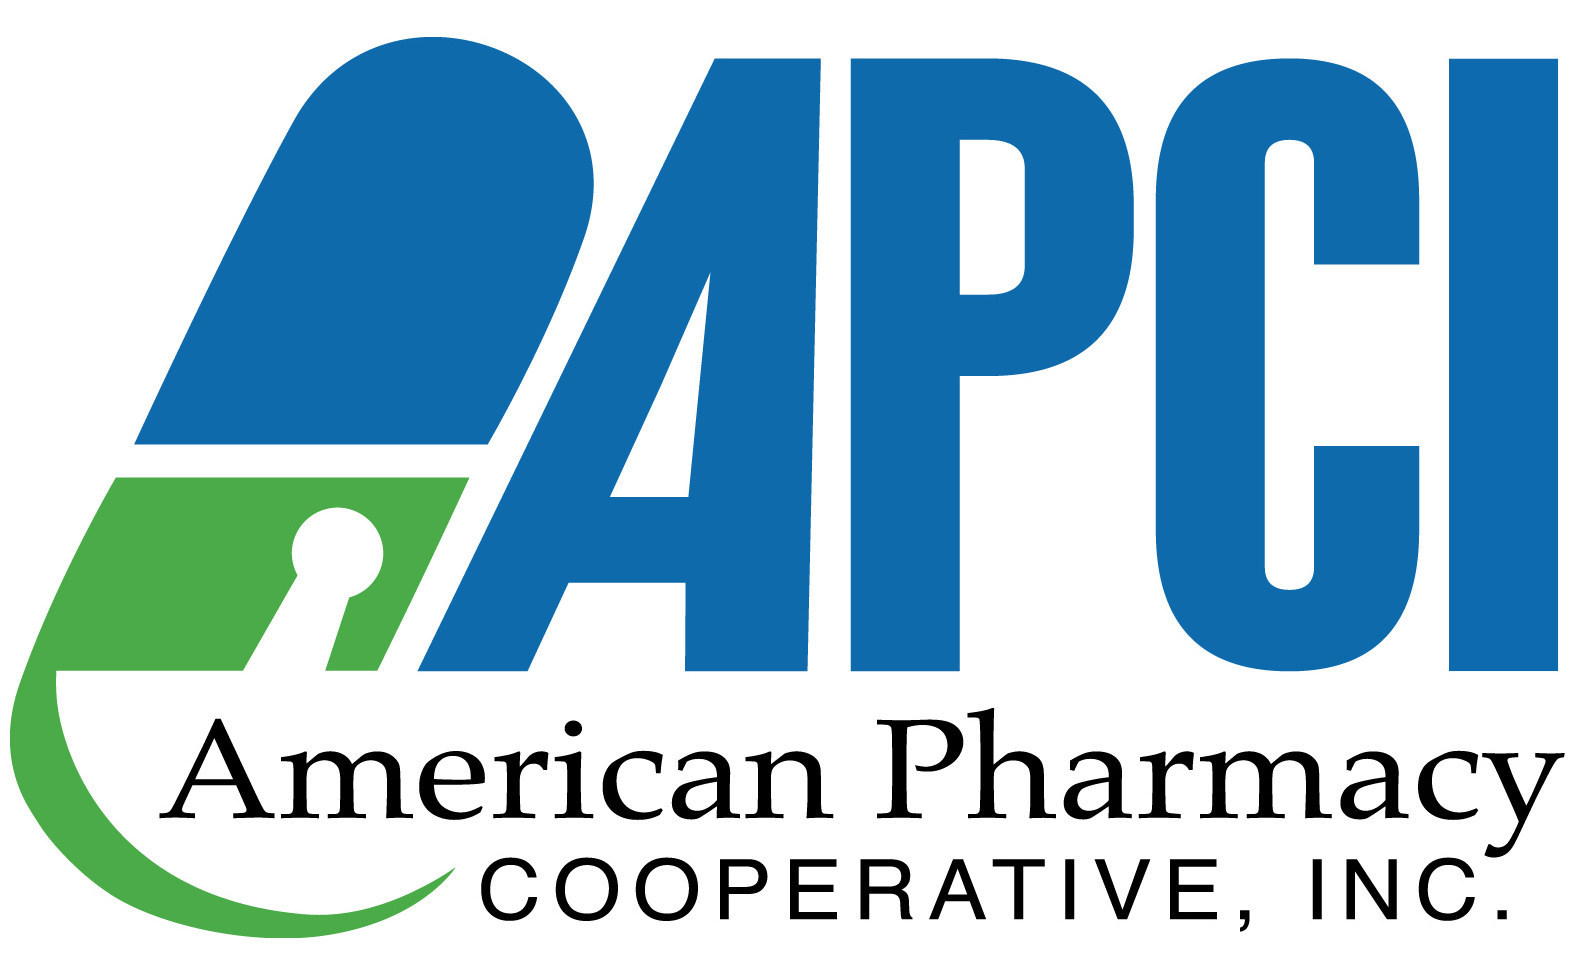 American Pharmacy Cooperative, Inc. logo (PRNewsfoto/American Pharmacy Cooperative, Inc.)